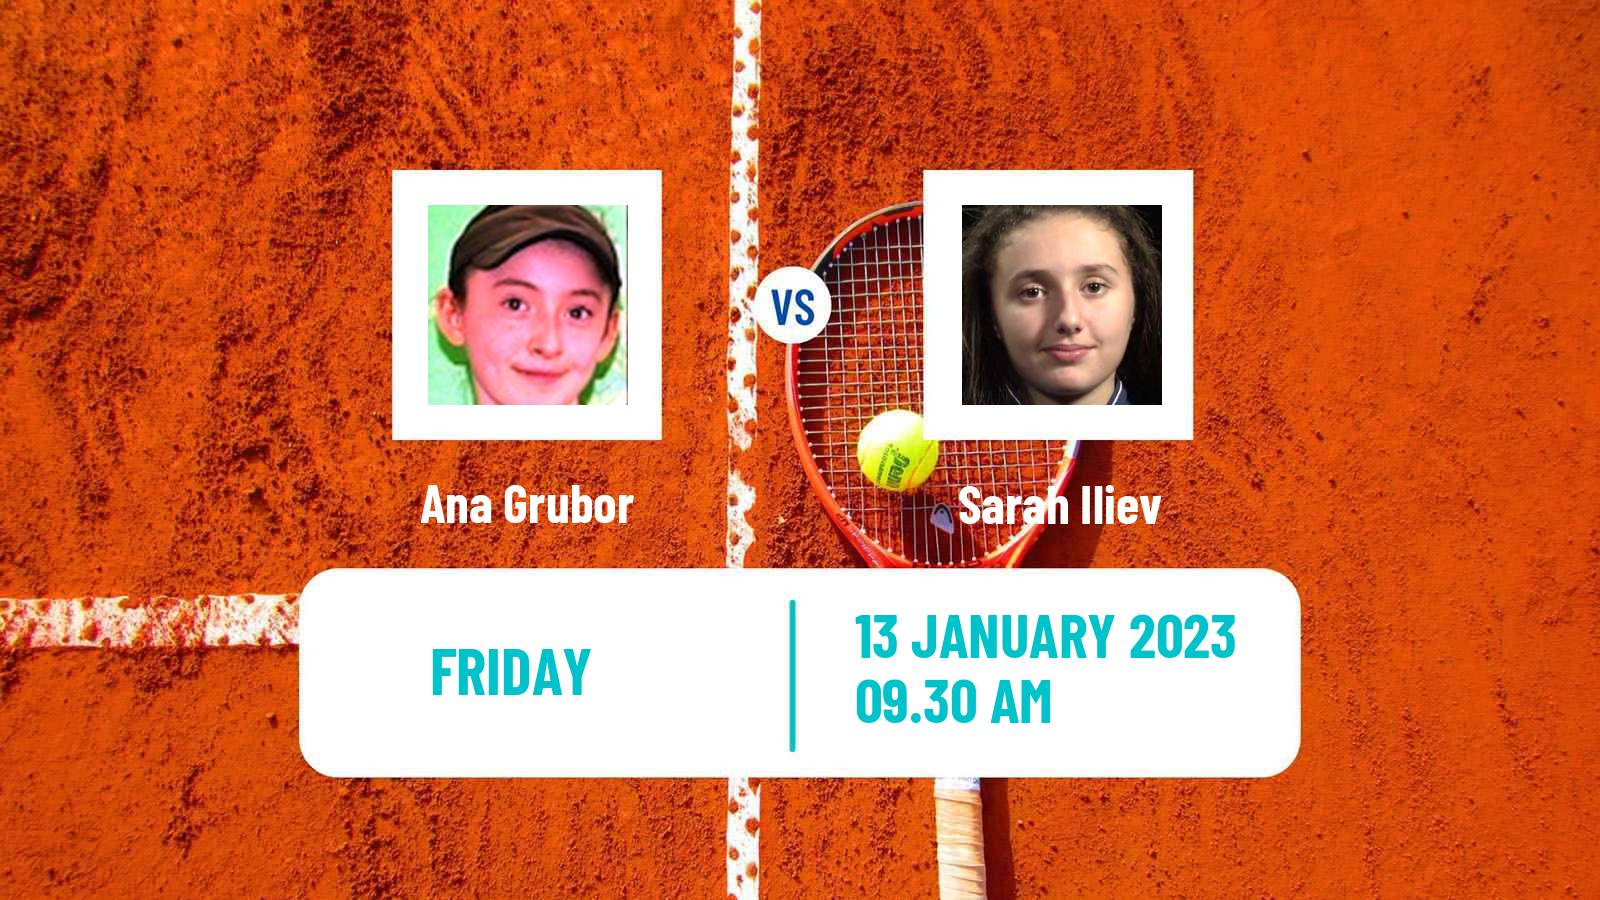 Tennis ITF Tournaments Ana Grubor - Sarah Iliev